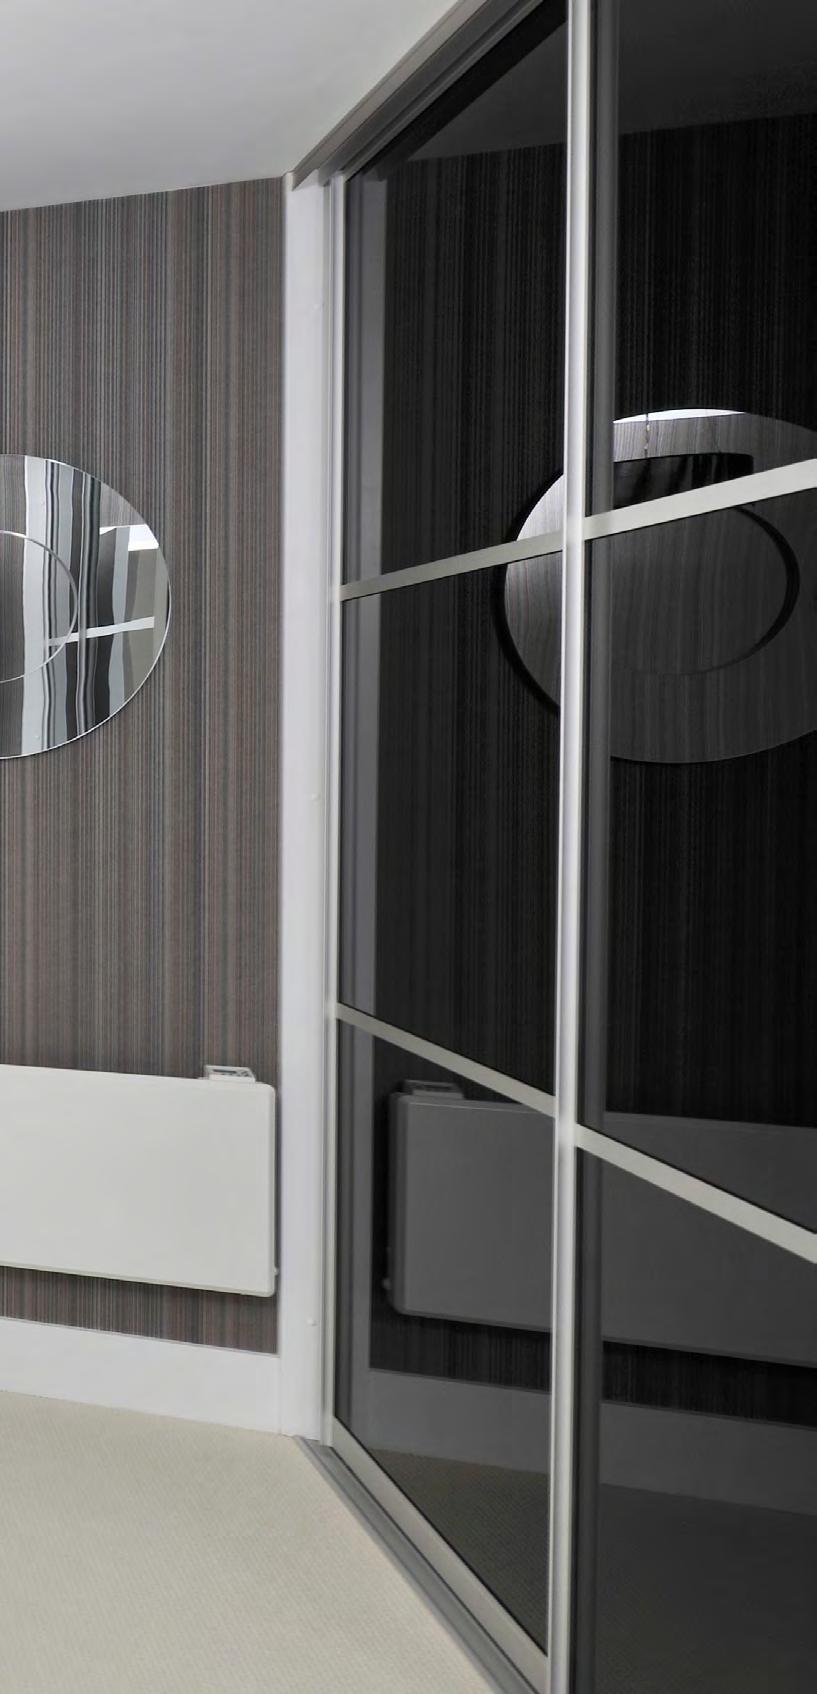 ALUMINIUM SLIDING WARDROBE DOORS Our Aluminium sliding doors are available in a variety of profile